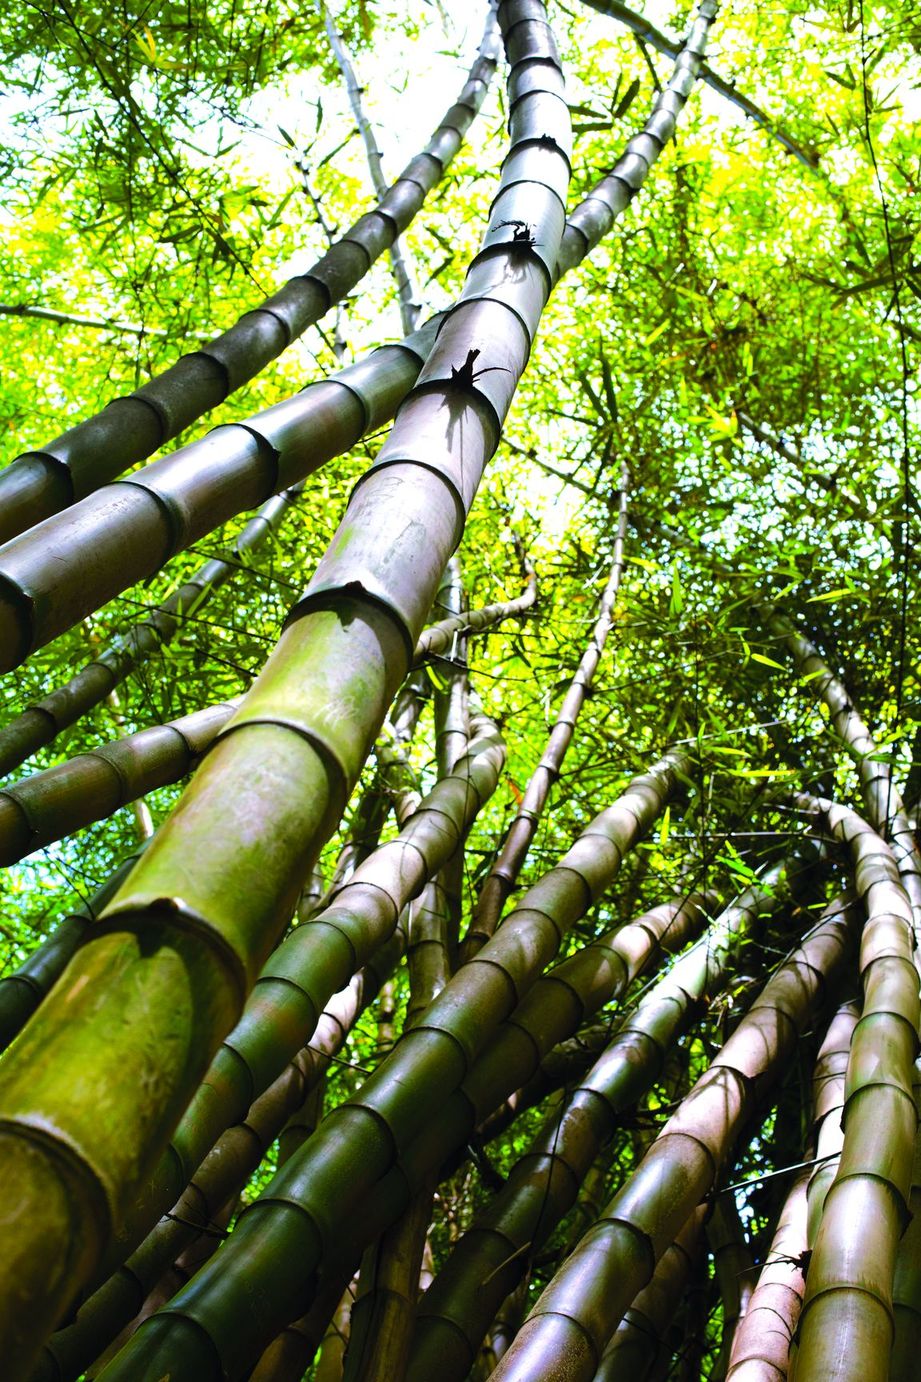 Kerajaan Negeri Sarawak Melabur untuk menanam 20,000 hektar buluh - Agrimag